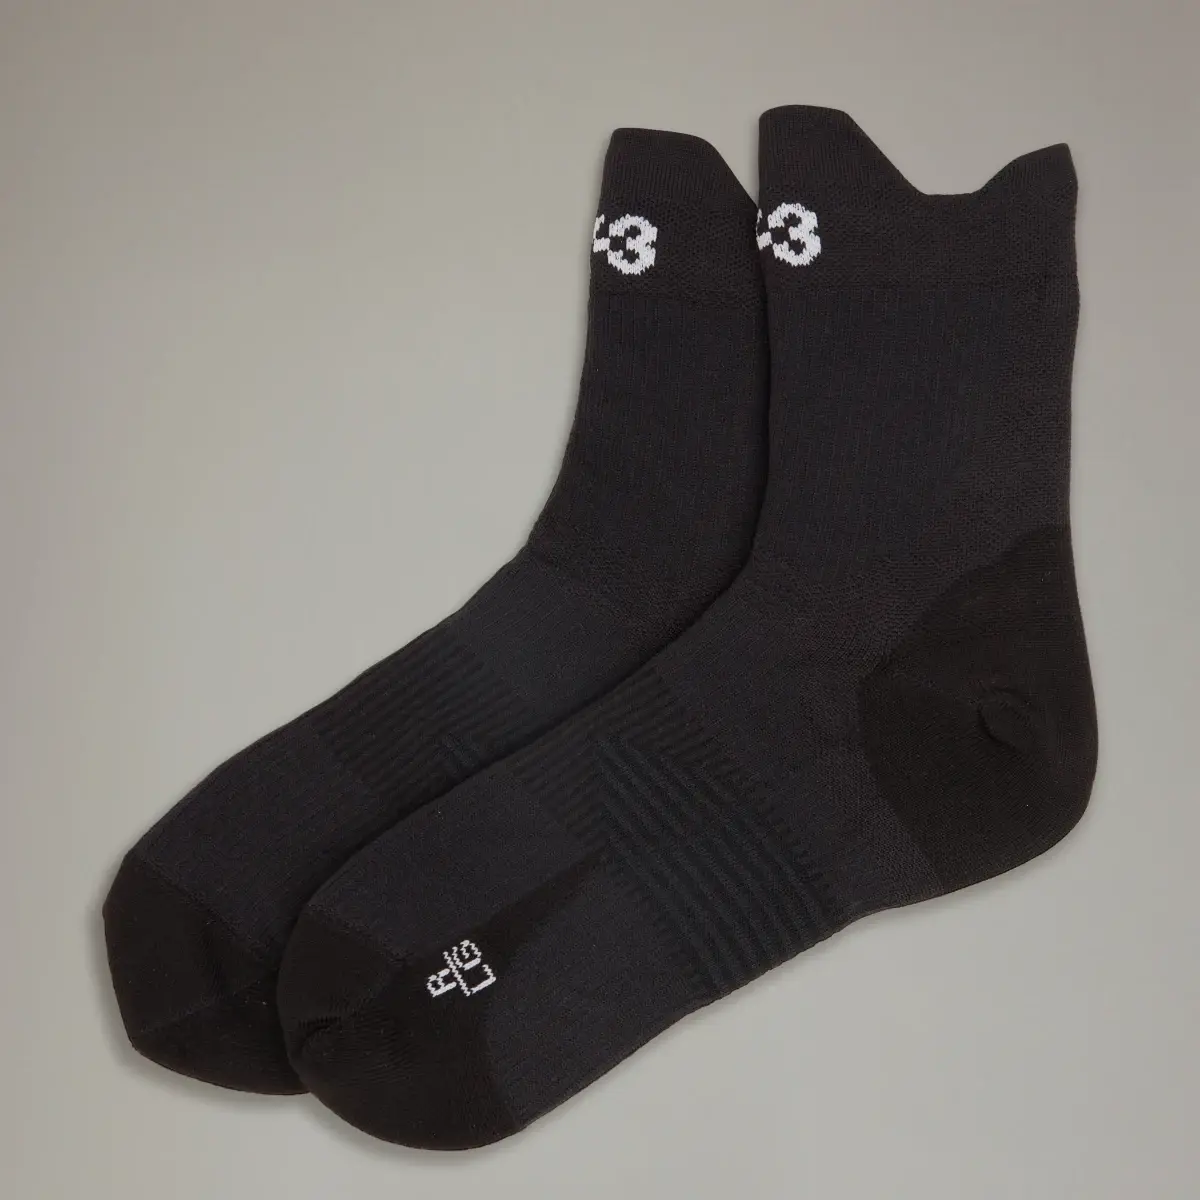 Adidas Y-3 Running Socks. 1